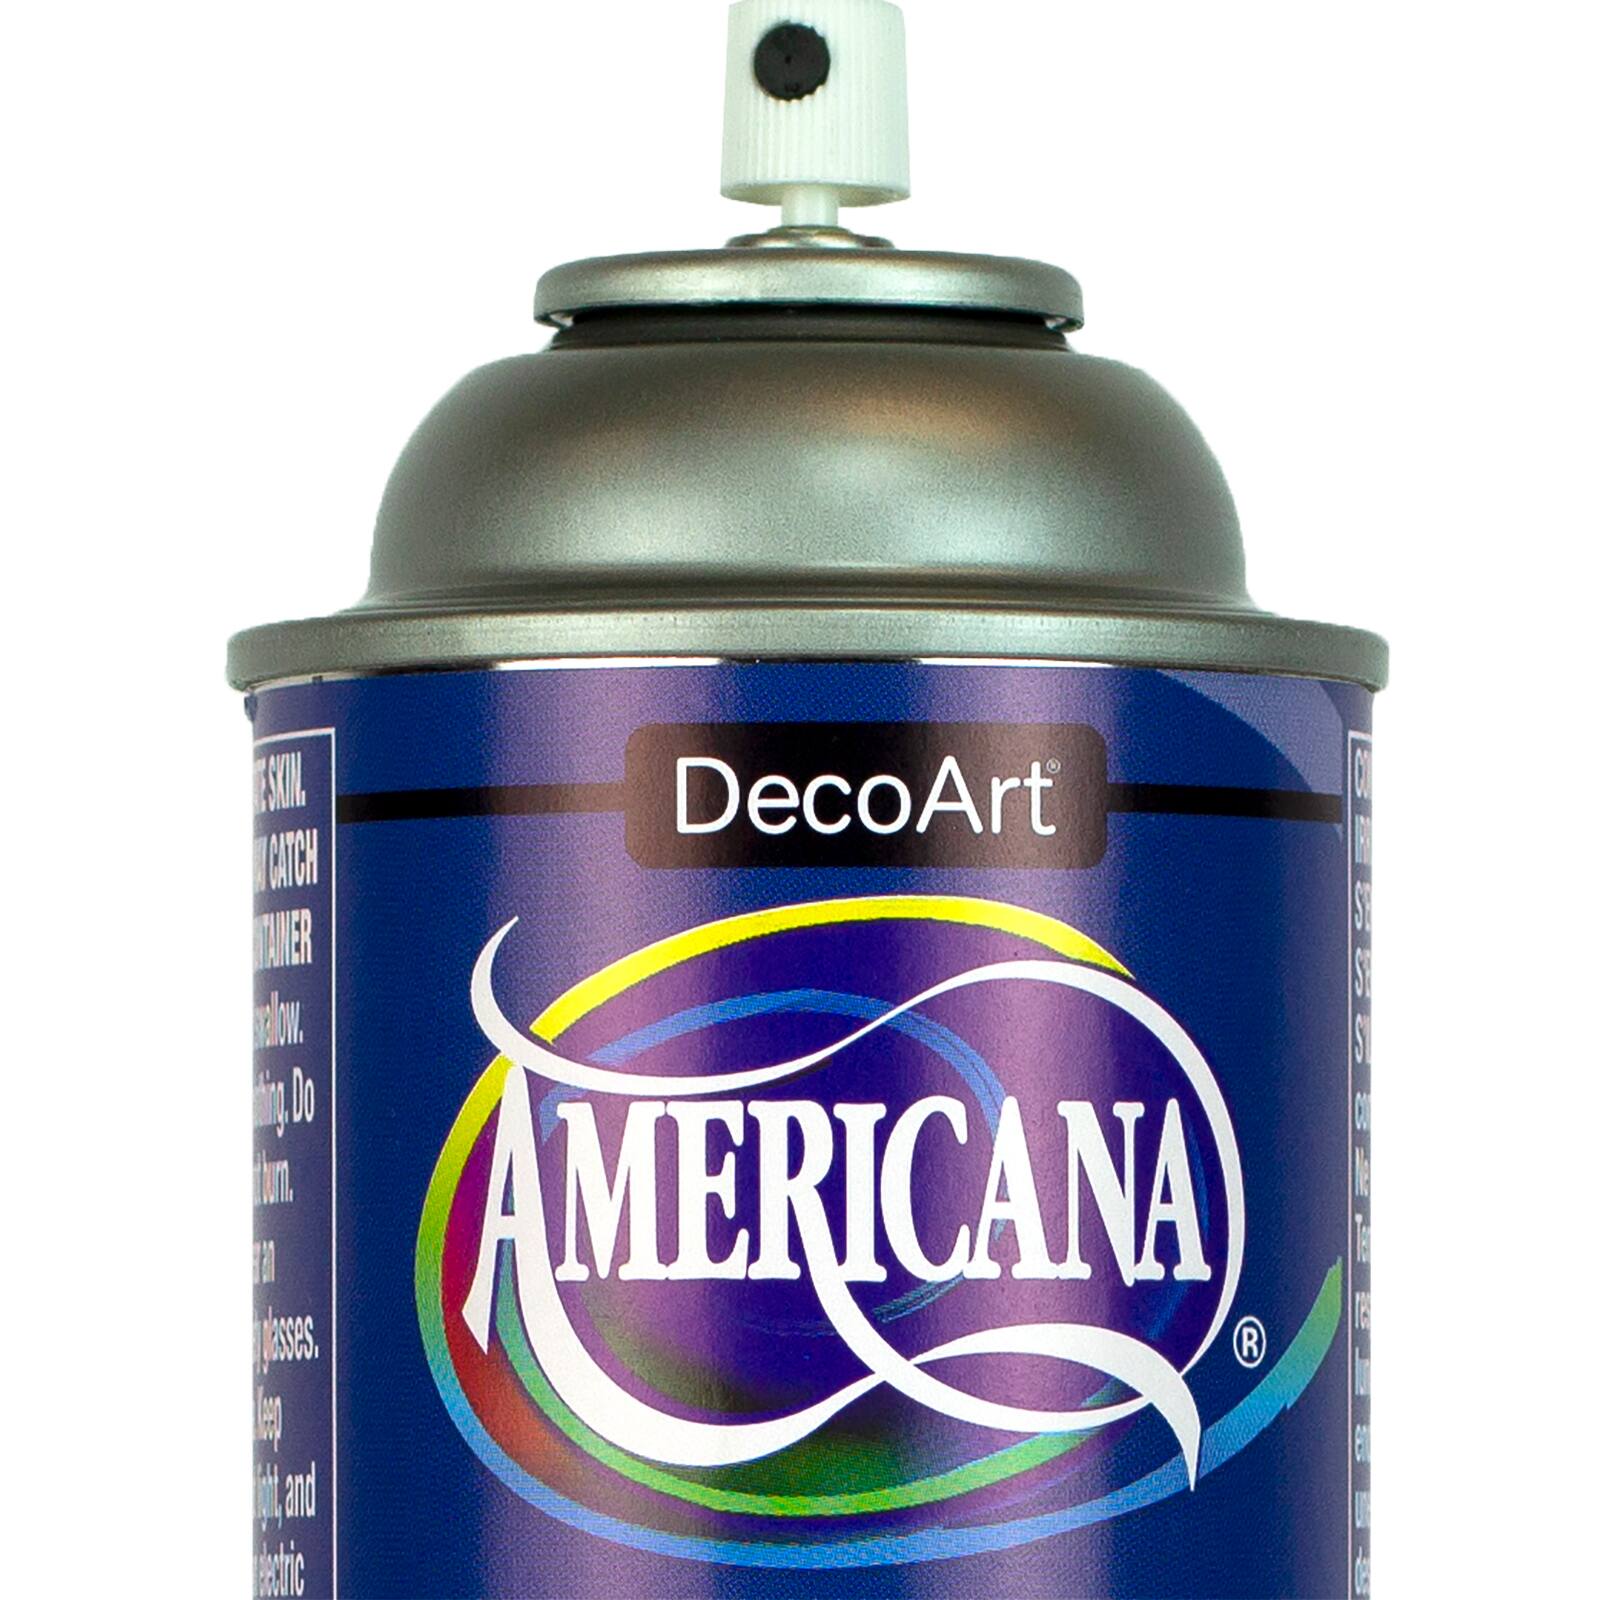  Deco Art 12-Ounce Americana Acrylic Sealer/Finish Aerosol Spray,  Matte : Tools & Home Improvement